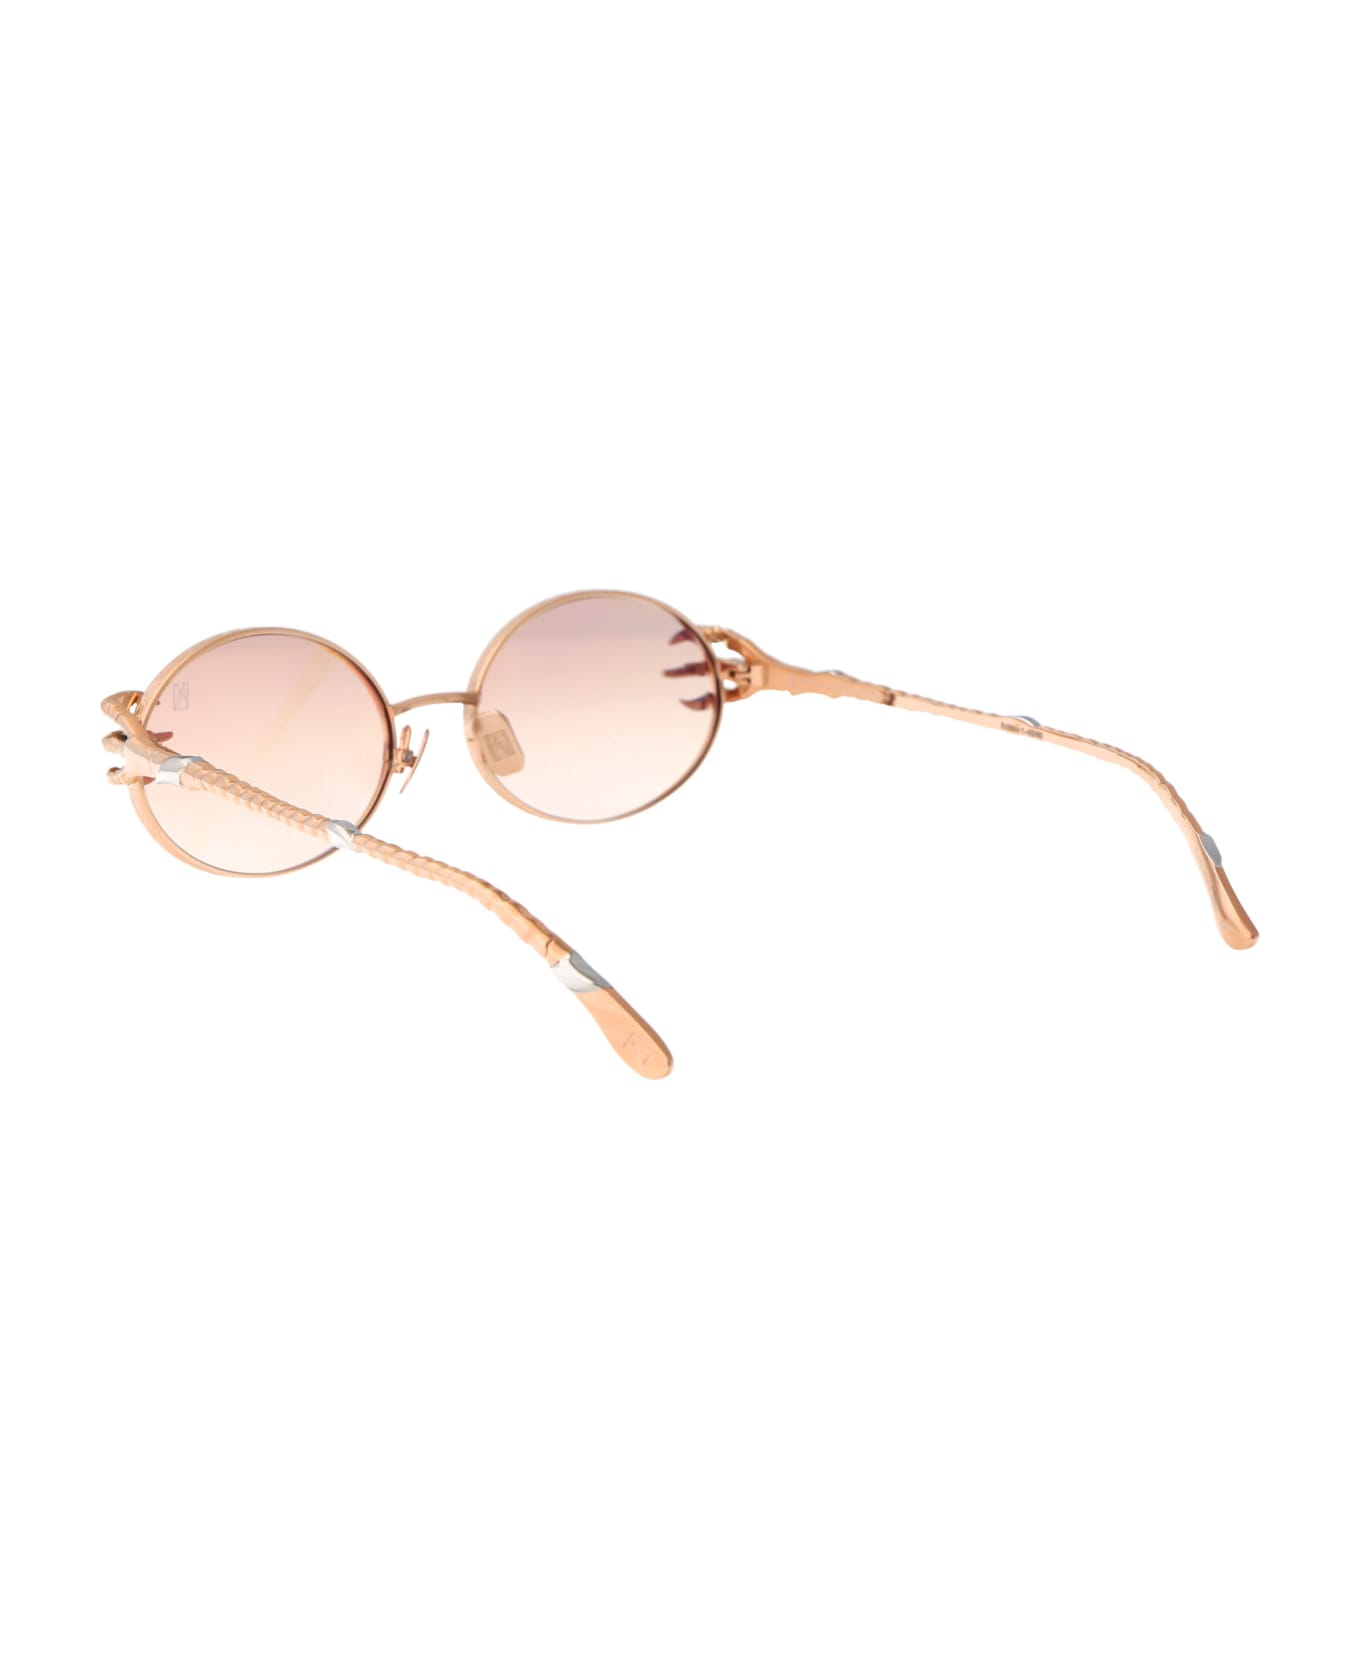 Anna-Karin Karlsson Claw Aventure Sunglasses - ROSE GOLD